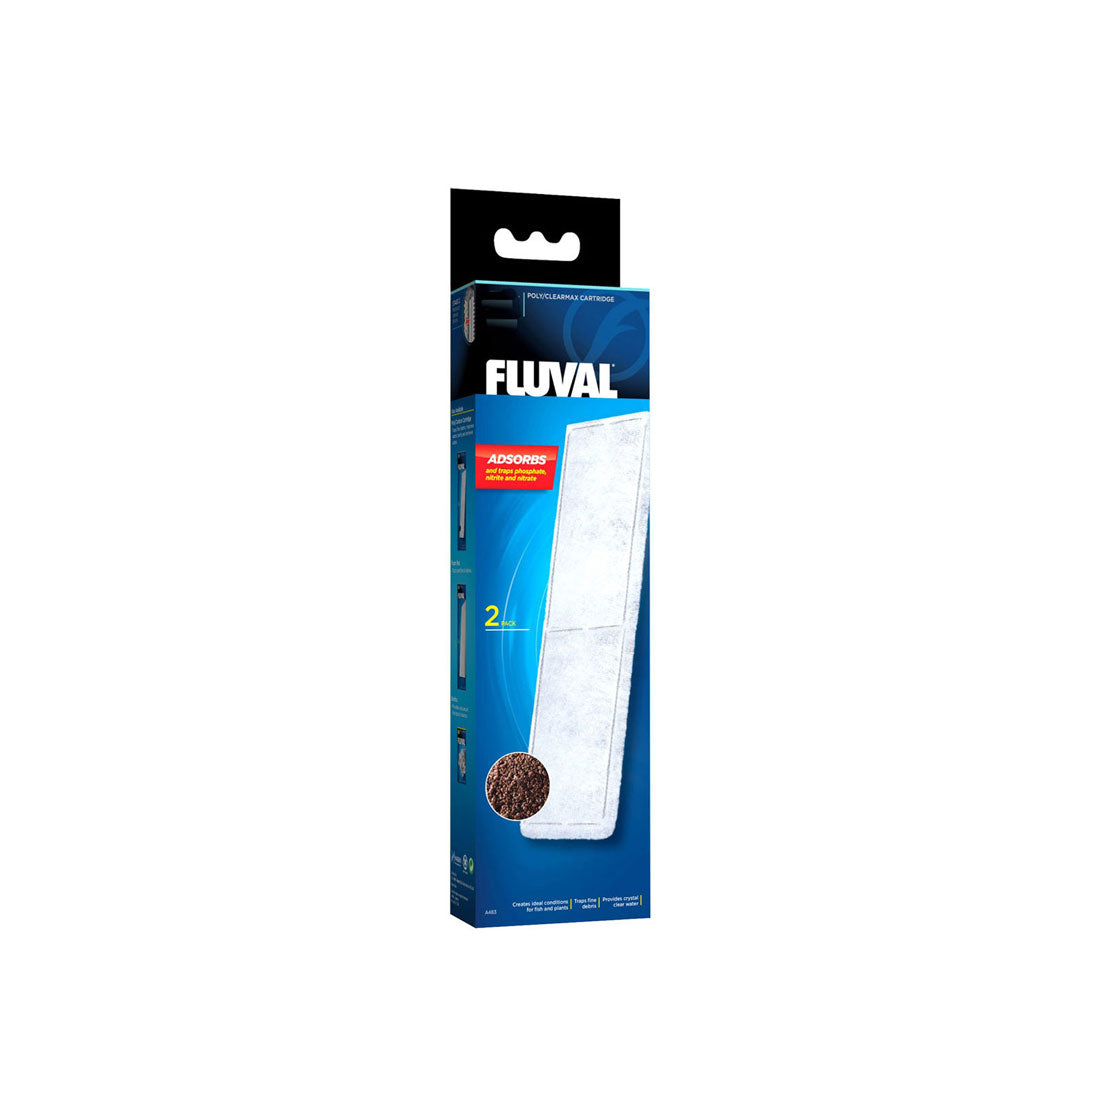 Fluval U3 Filter Media - Poly/Clearmax Cartridge, 2-pack